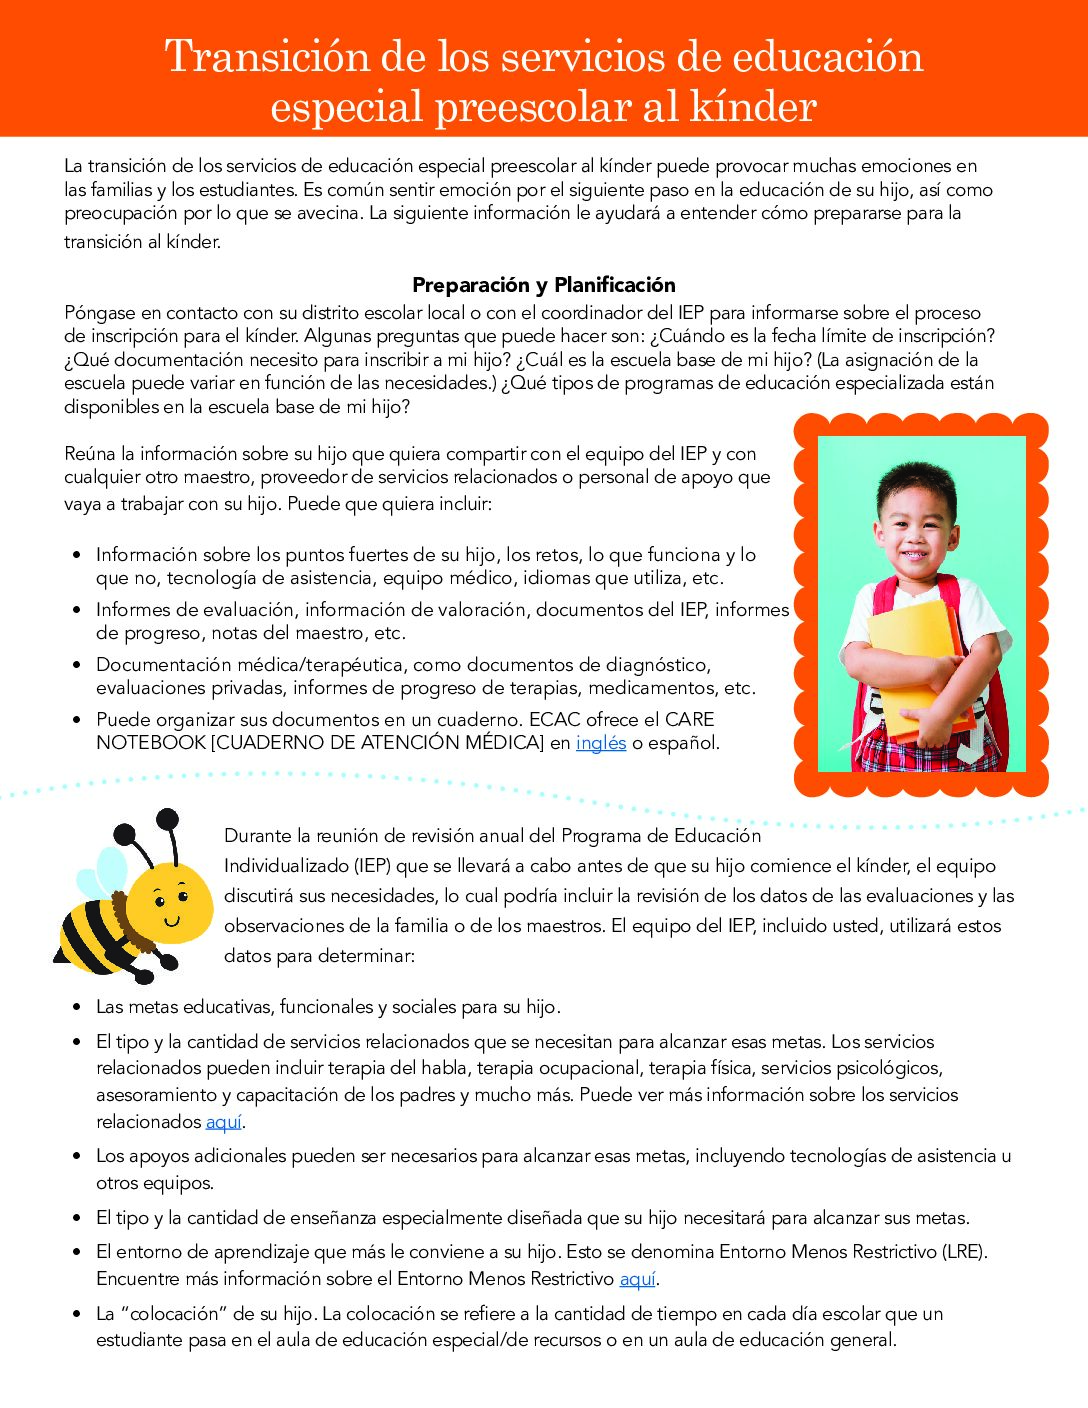 Transition to Kindergarten Fact sheet_05182023_Spanish